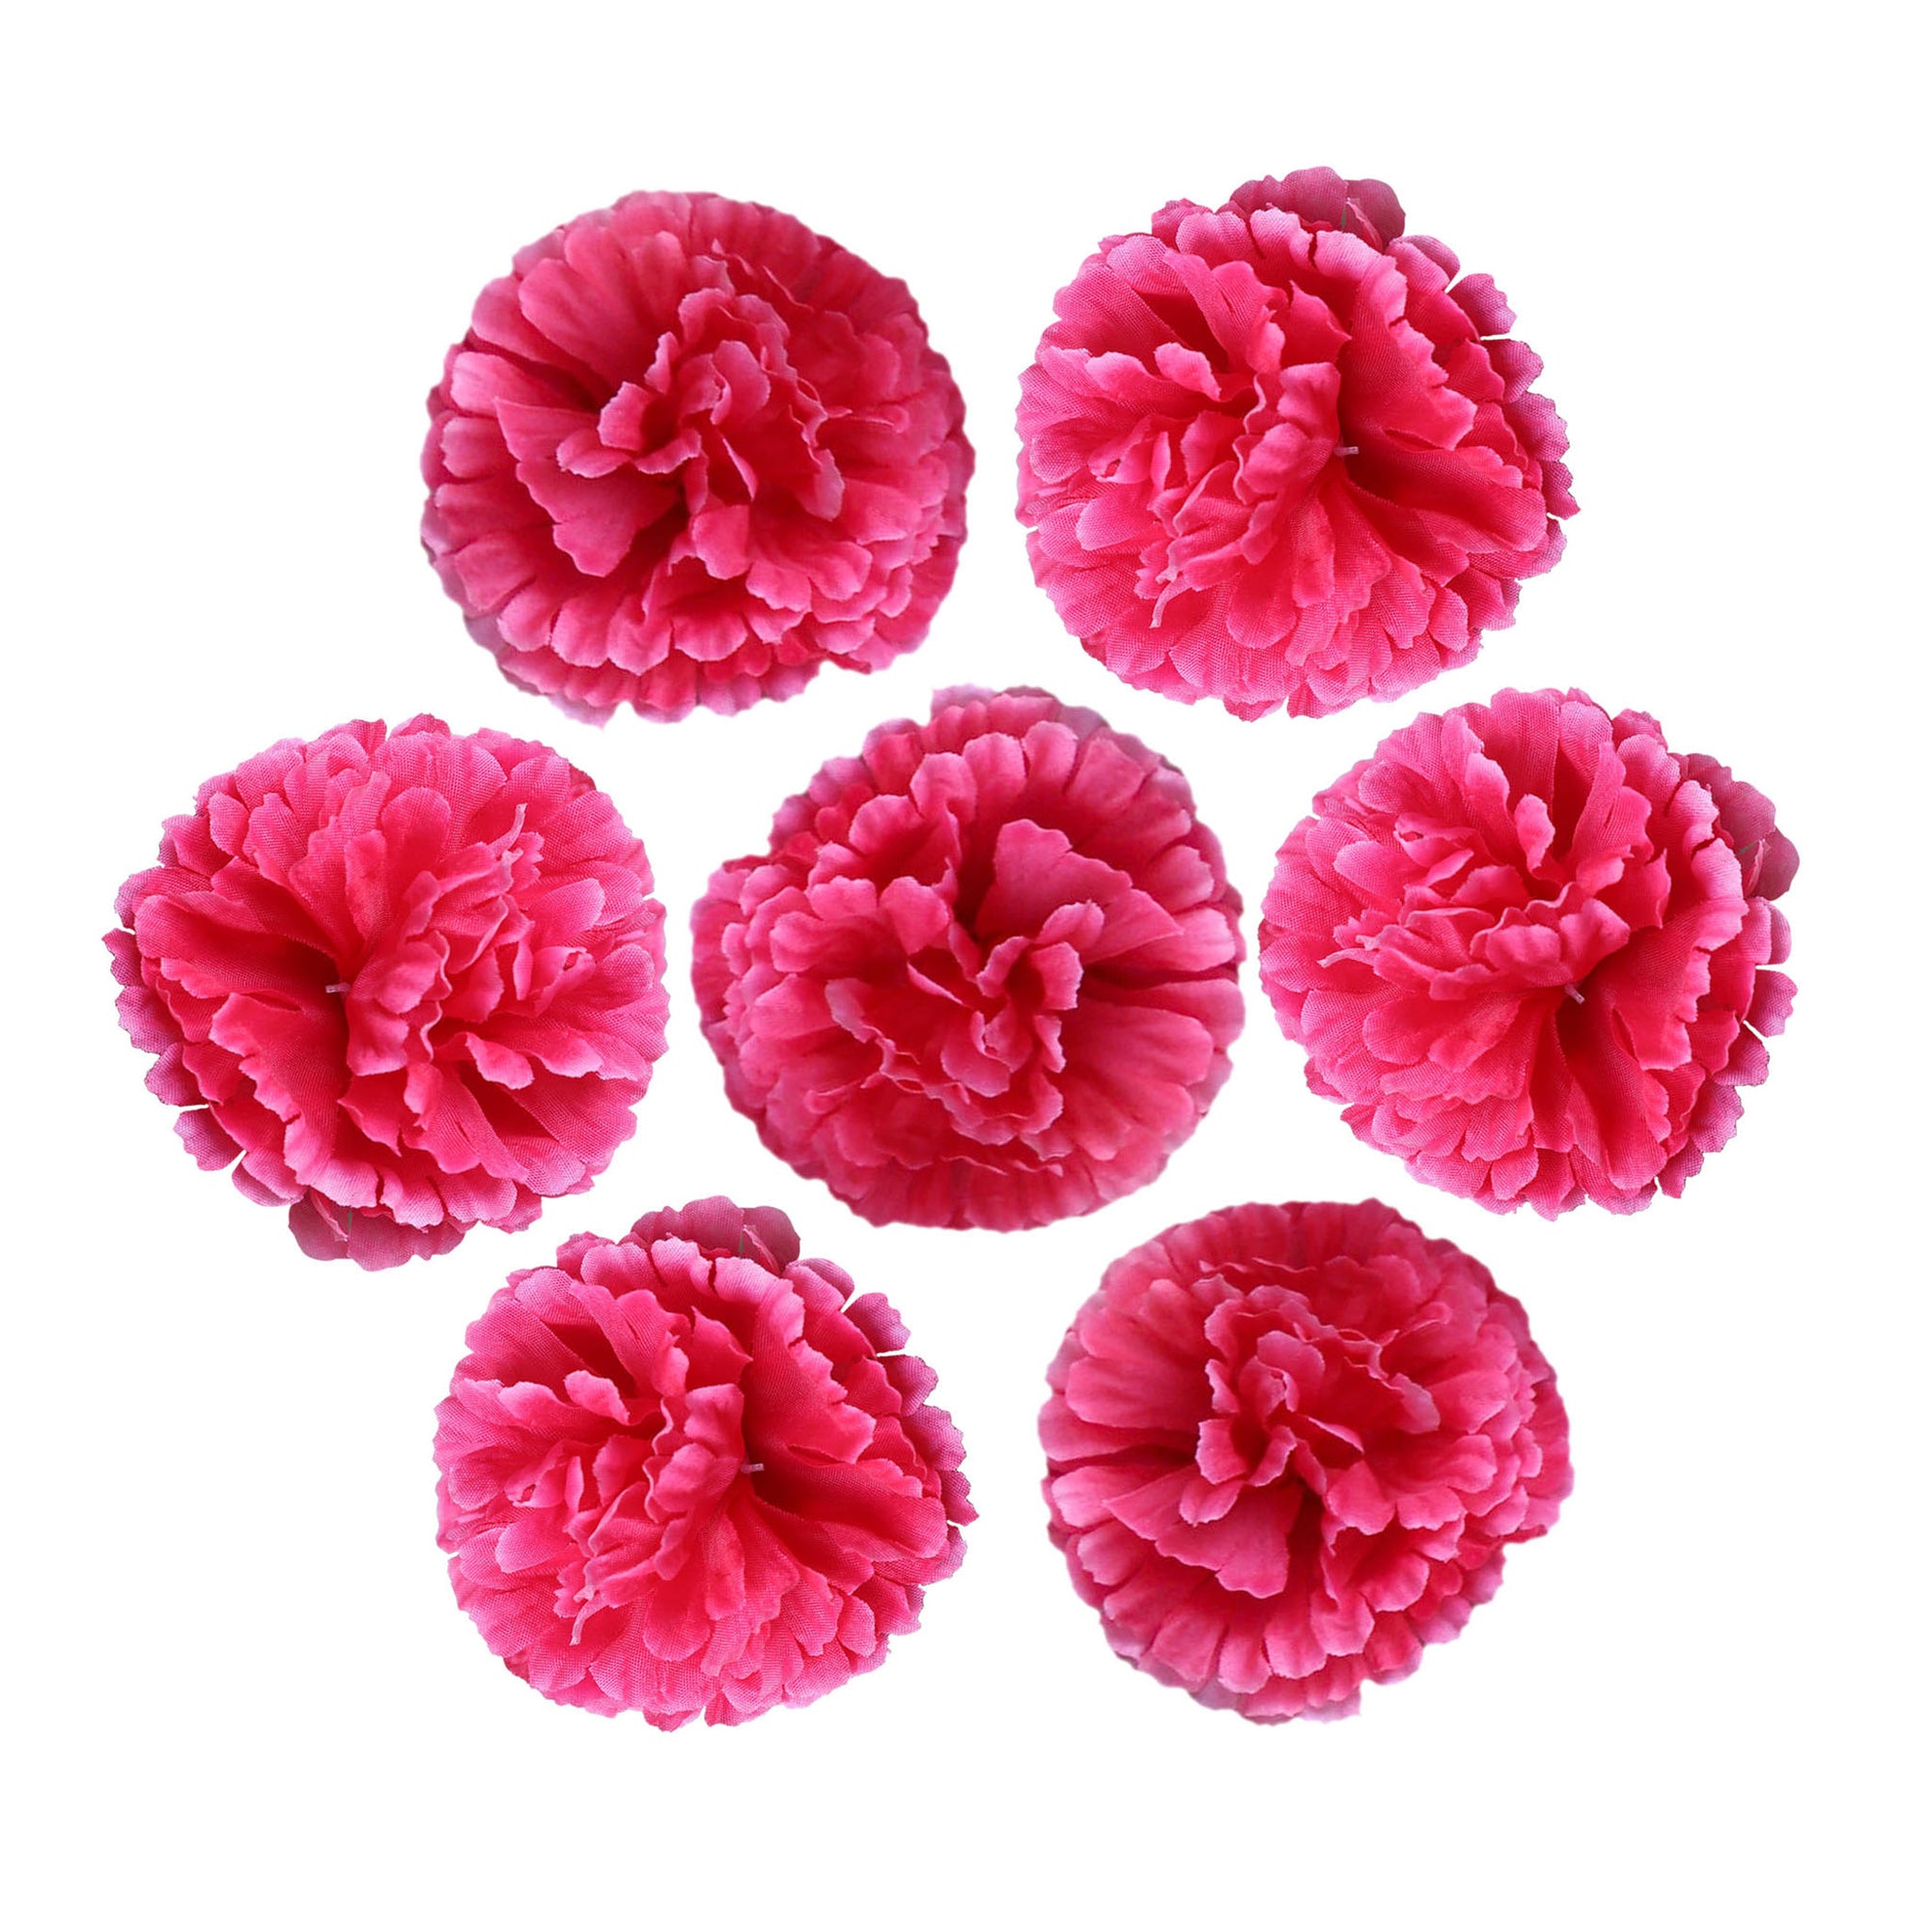 Silk Carnation Flowers Wholesale Bulk Fake Flower Heads 100 pcs